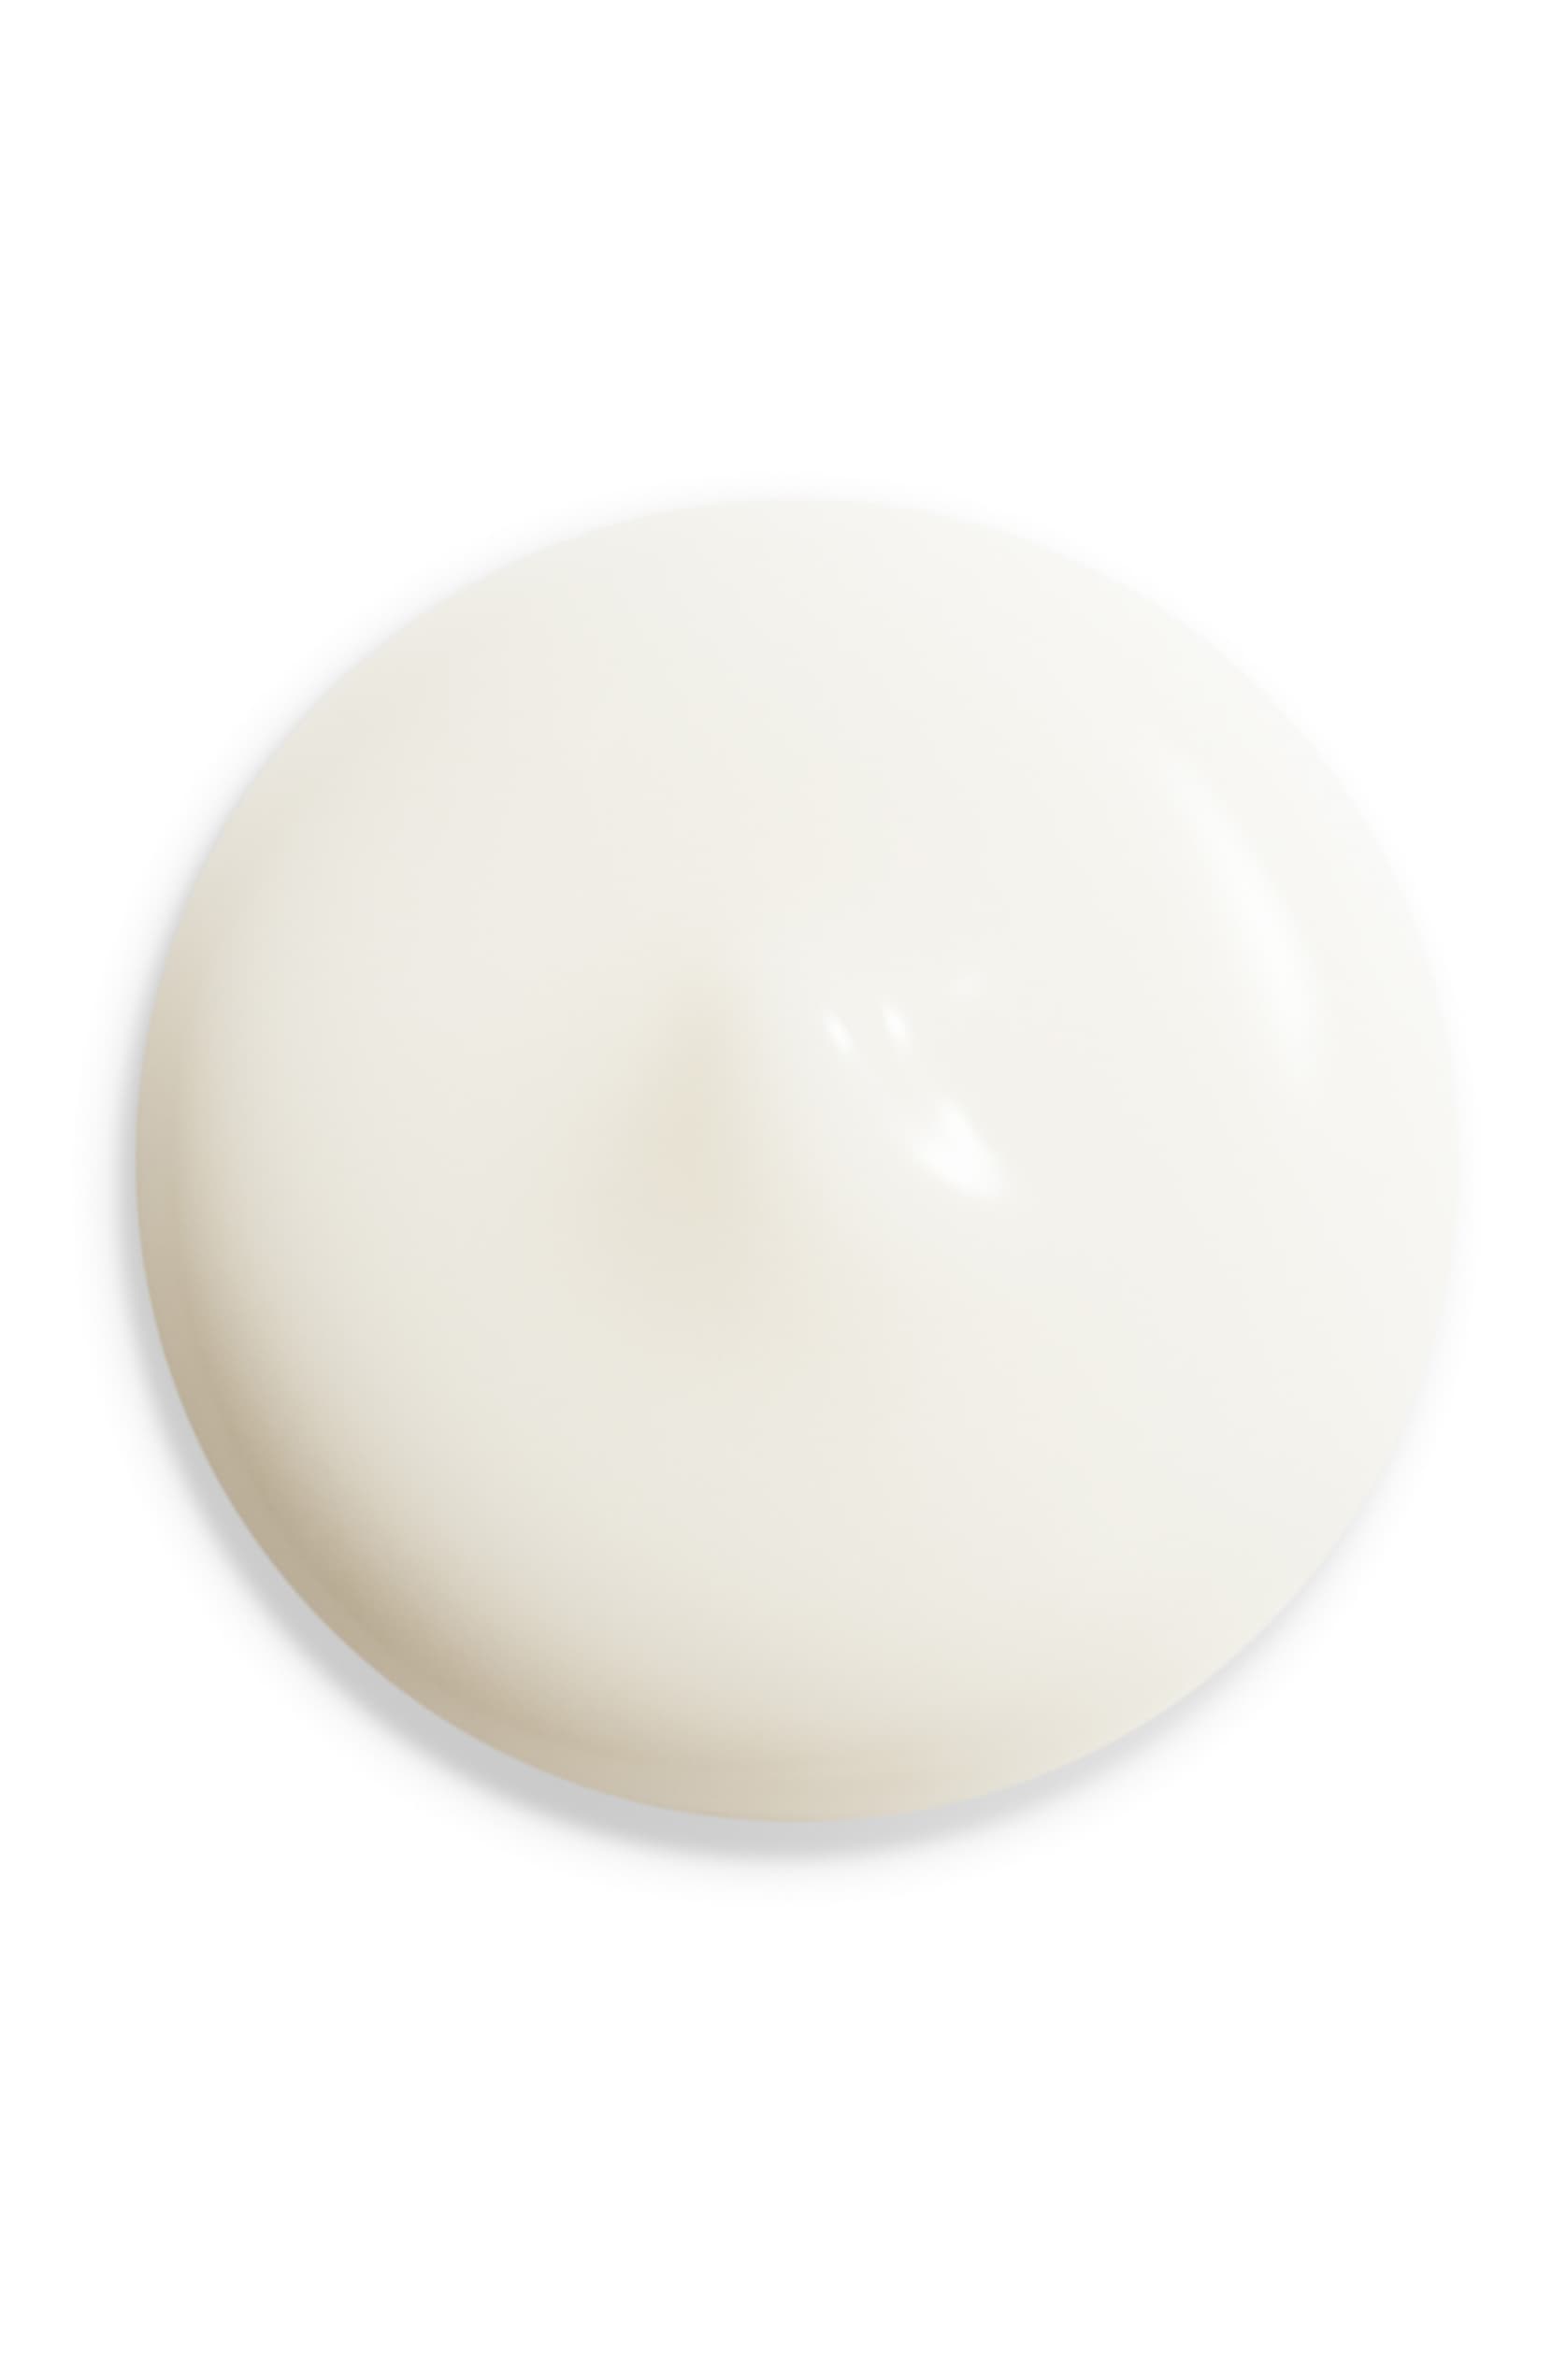 Shiseido White Lucent Illuminating Micro-Spot Serum, 50mL / 1.6 FL. OZ - eCosmeticWorld